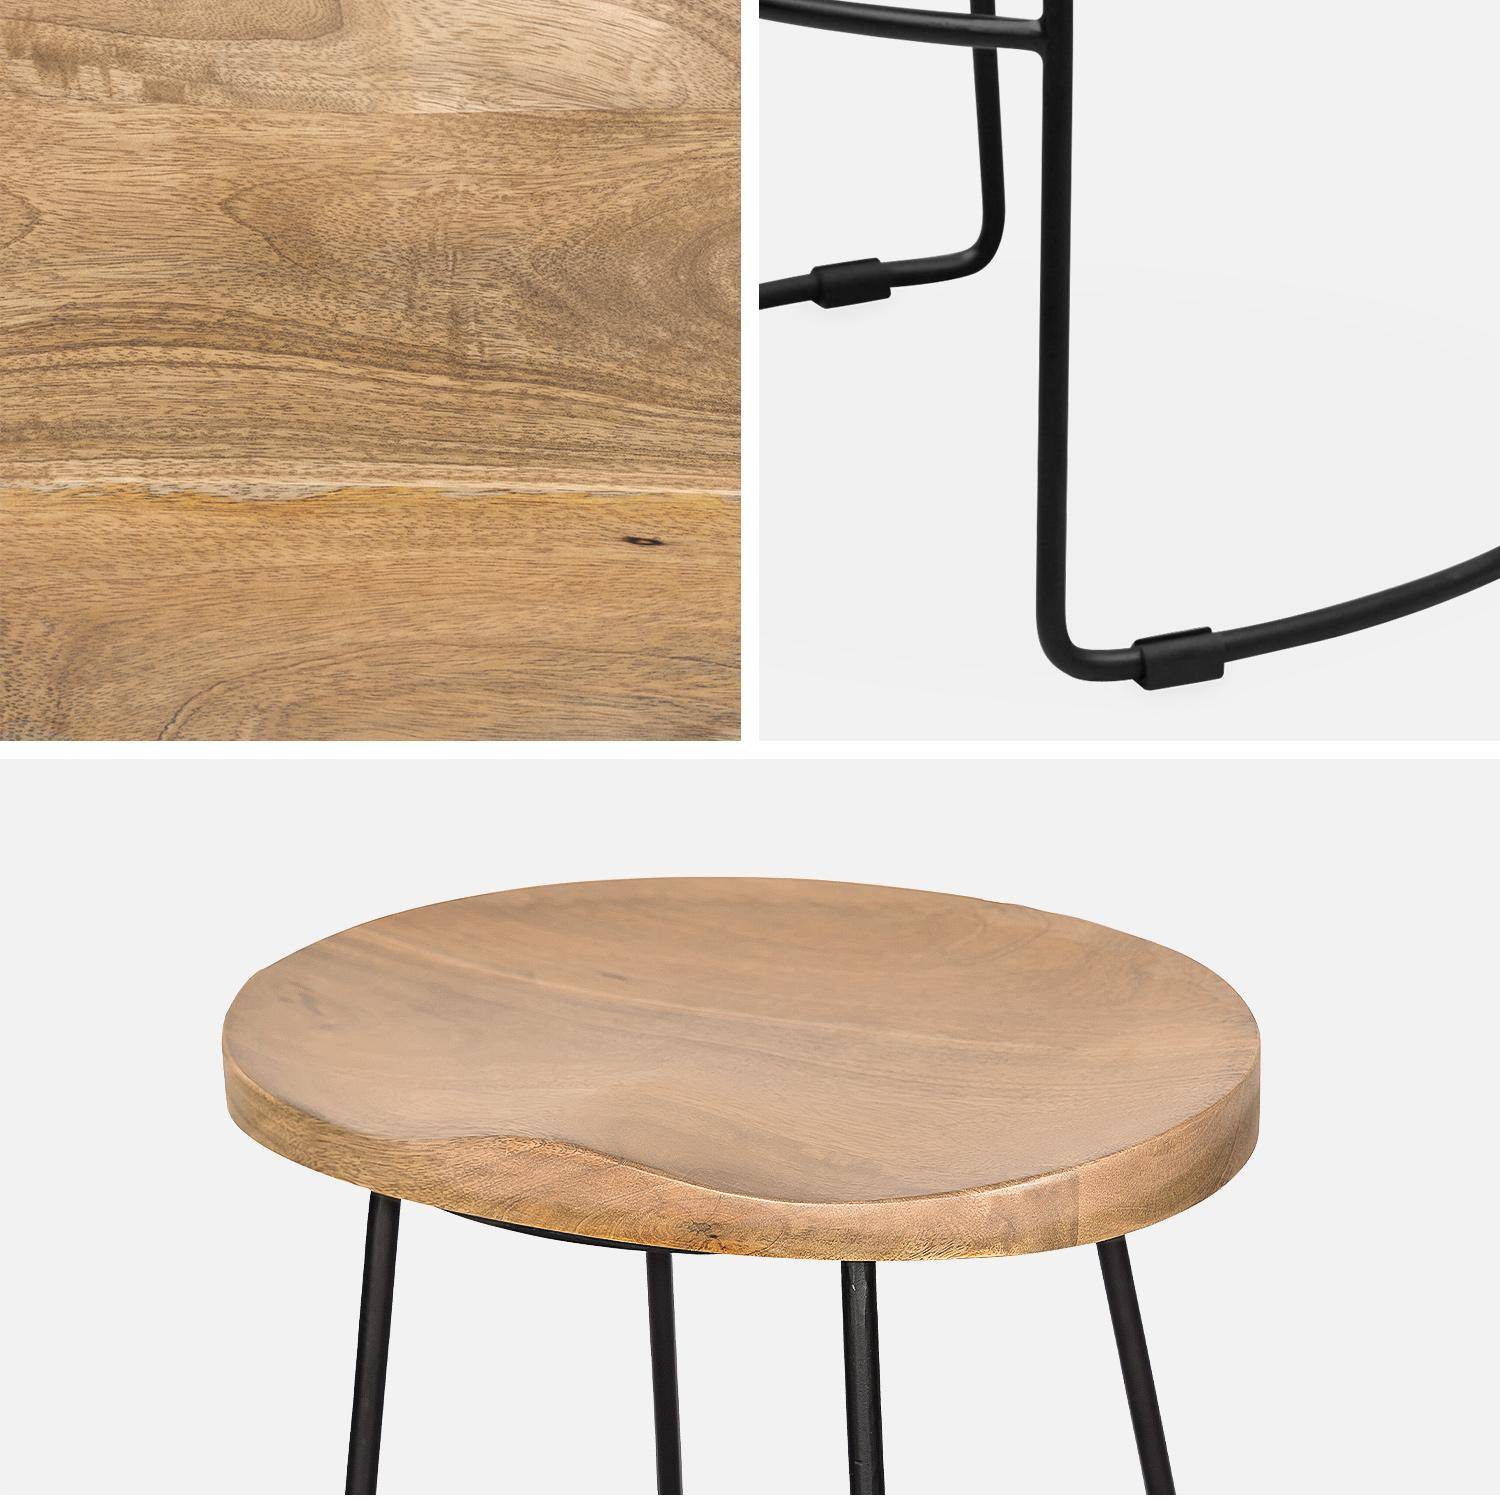 Pair of industrial metal and wooden bar stools, 44x36x65cm, Jaya, Natural, Mango wood seat, black metal legs Photo7